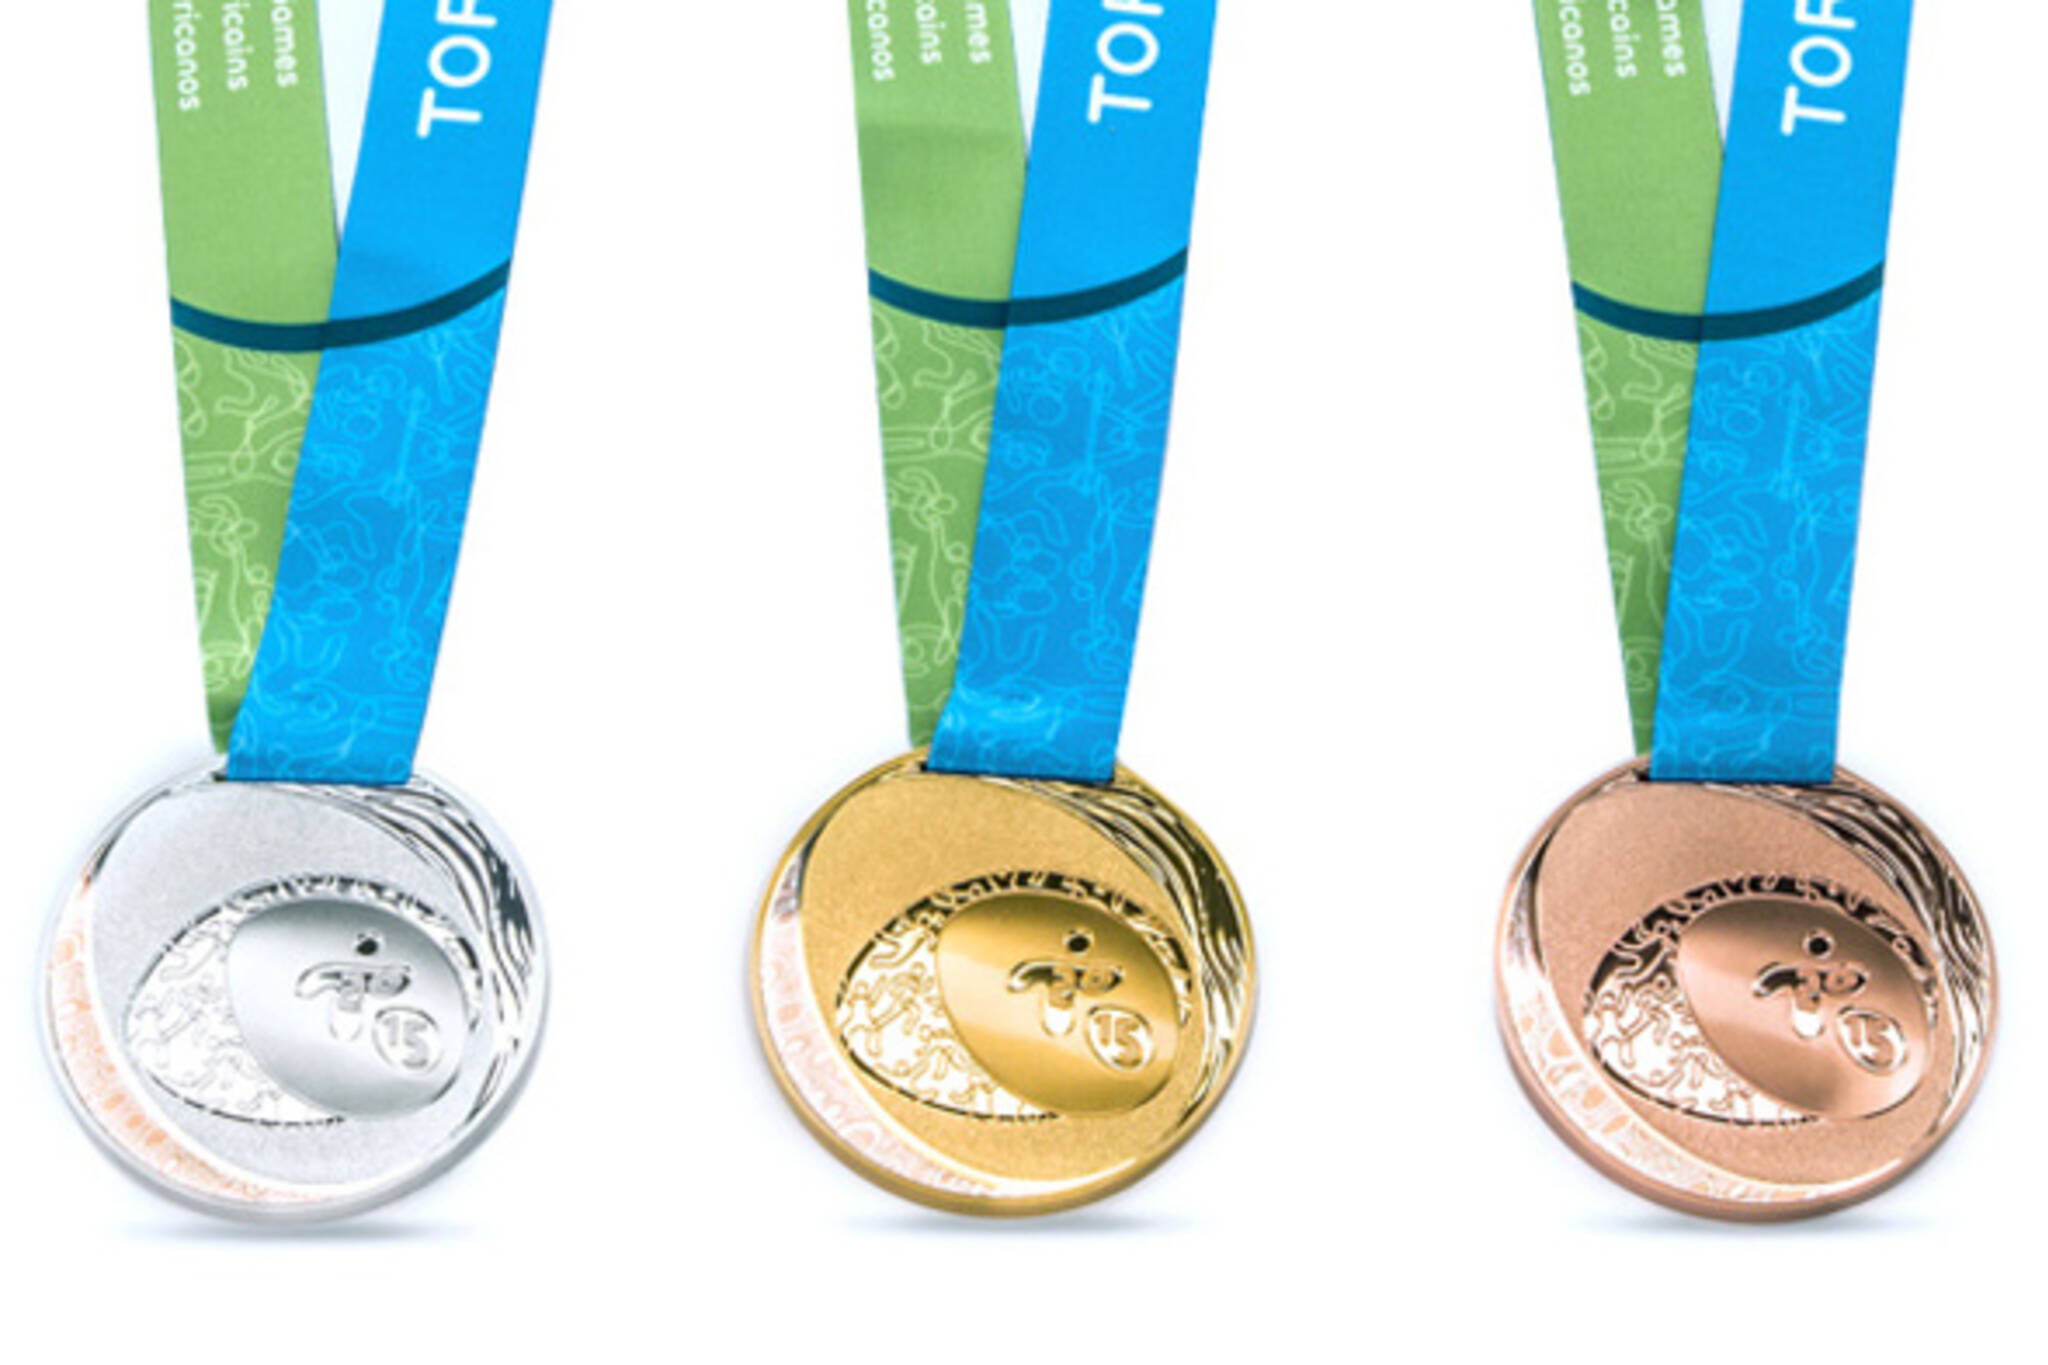 toronto pan am games 2015 medals